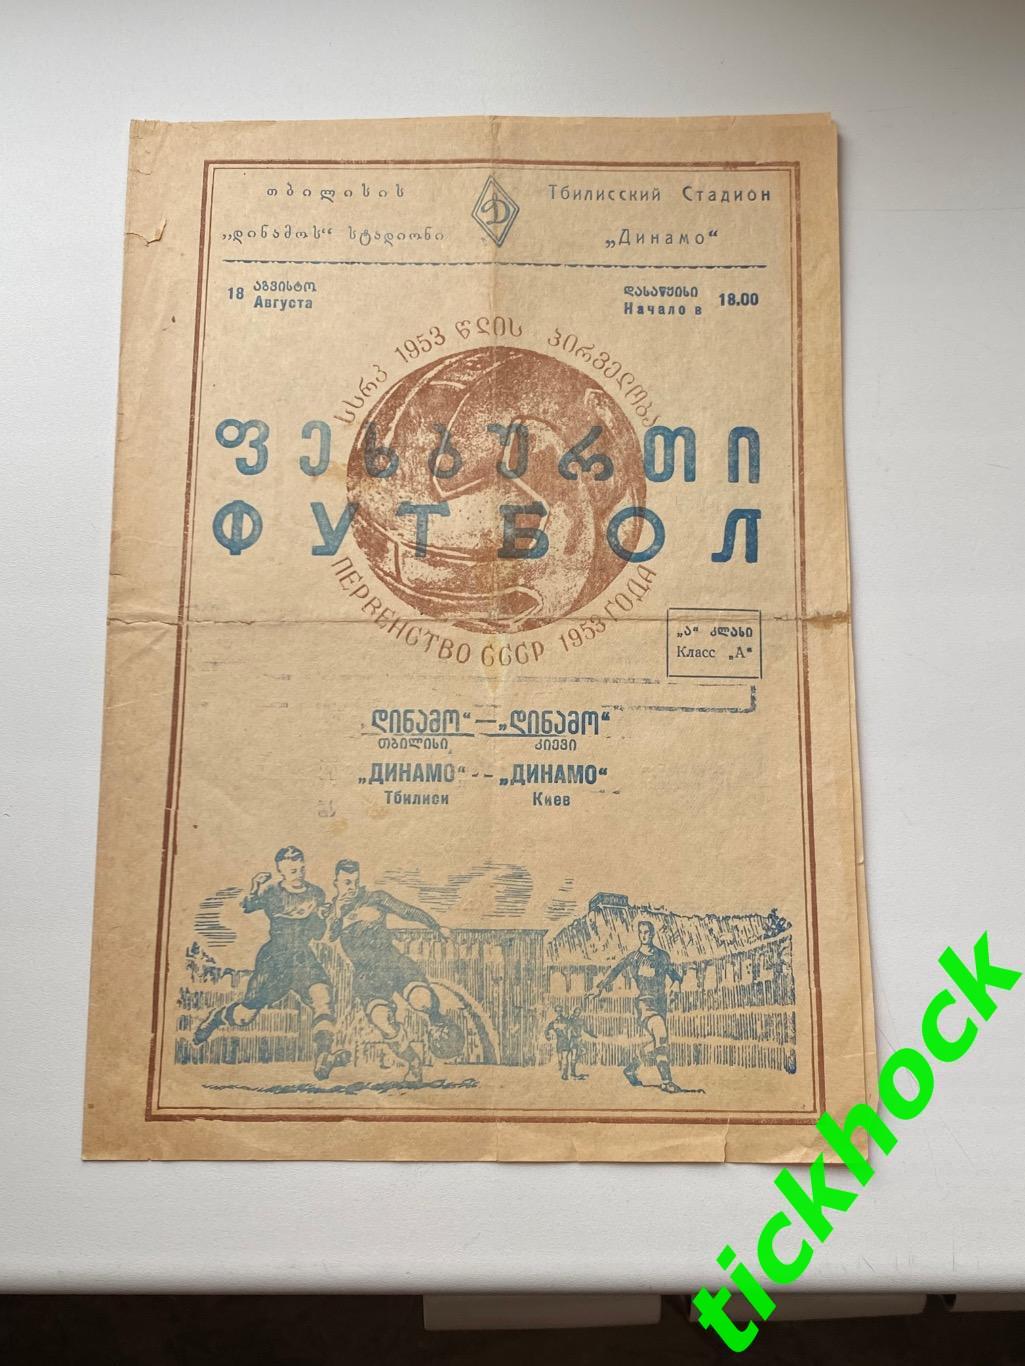 Динамо Тбилиси – Динамо Киев 18.08.1953. Первенство СССР